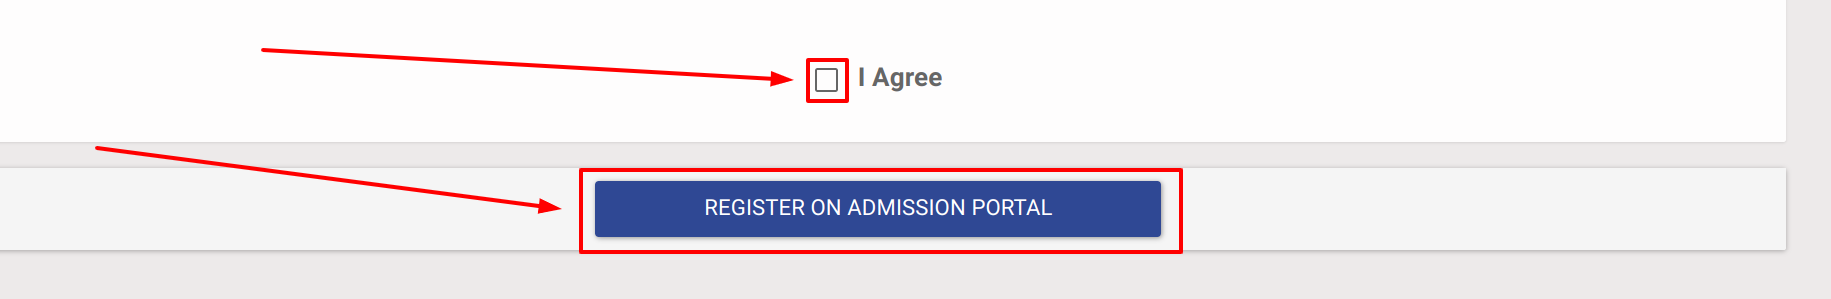 Lucknow universityRegister on Admission Portal 